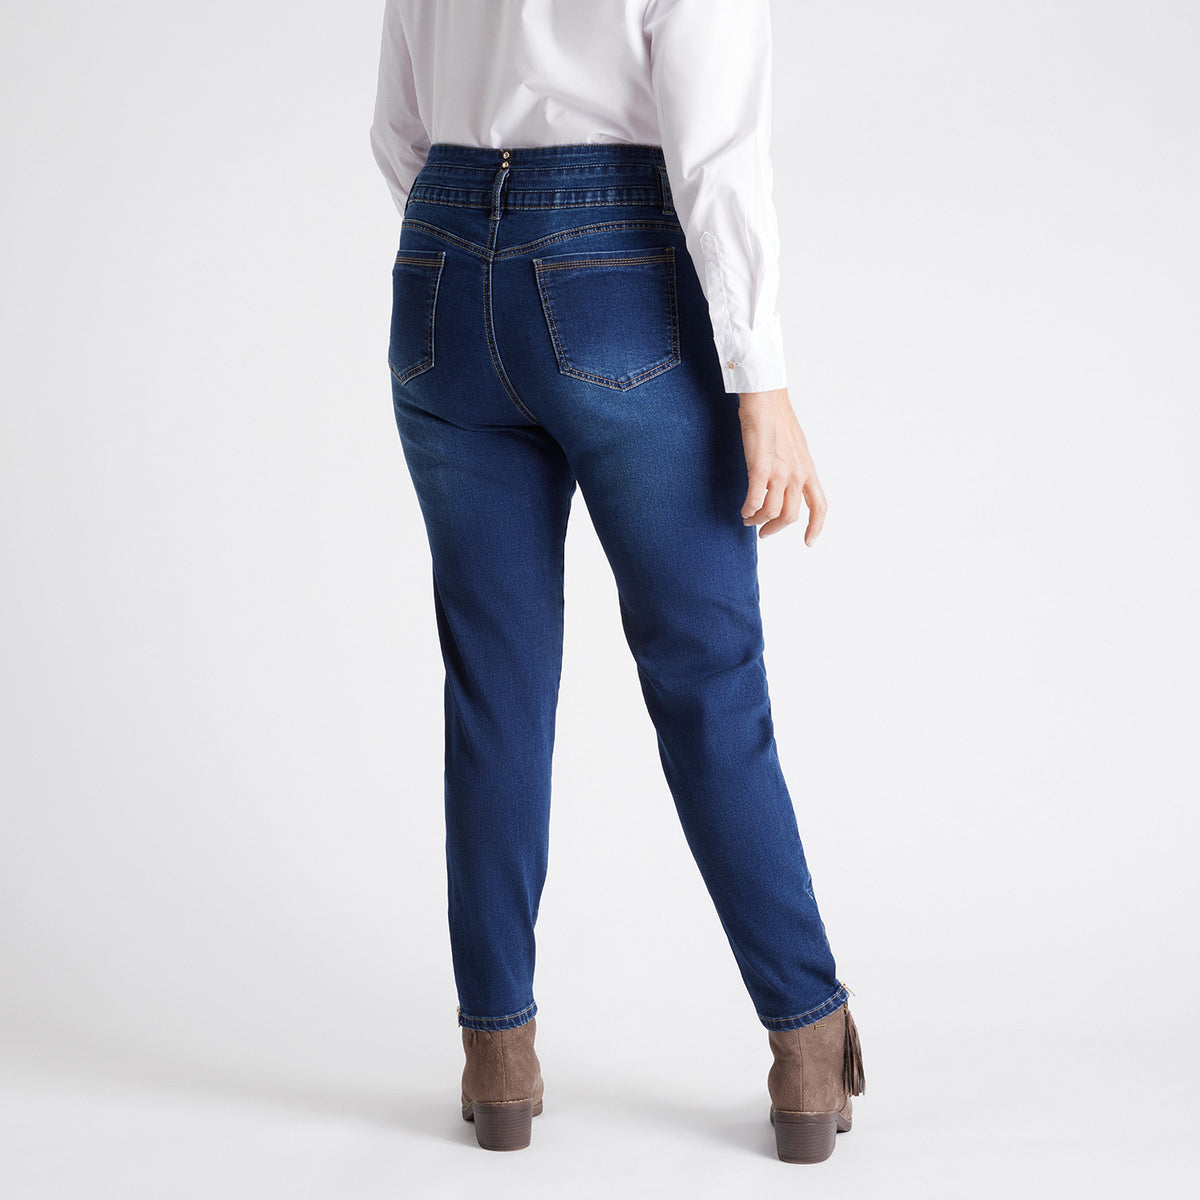 Productoscyb - Hermoso jeans para dama TIRO ALTO 🛍🛍🛍